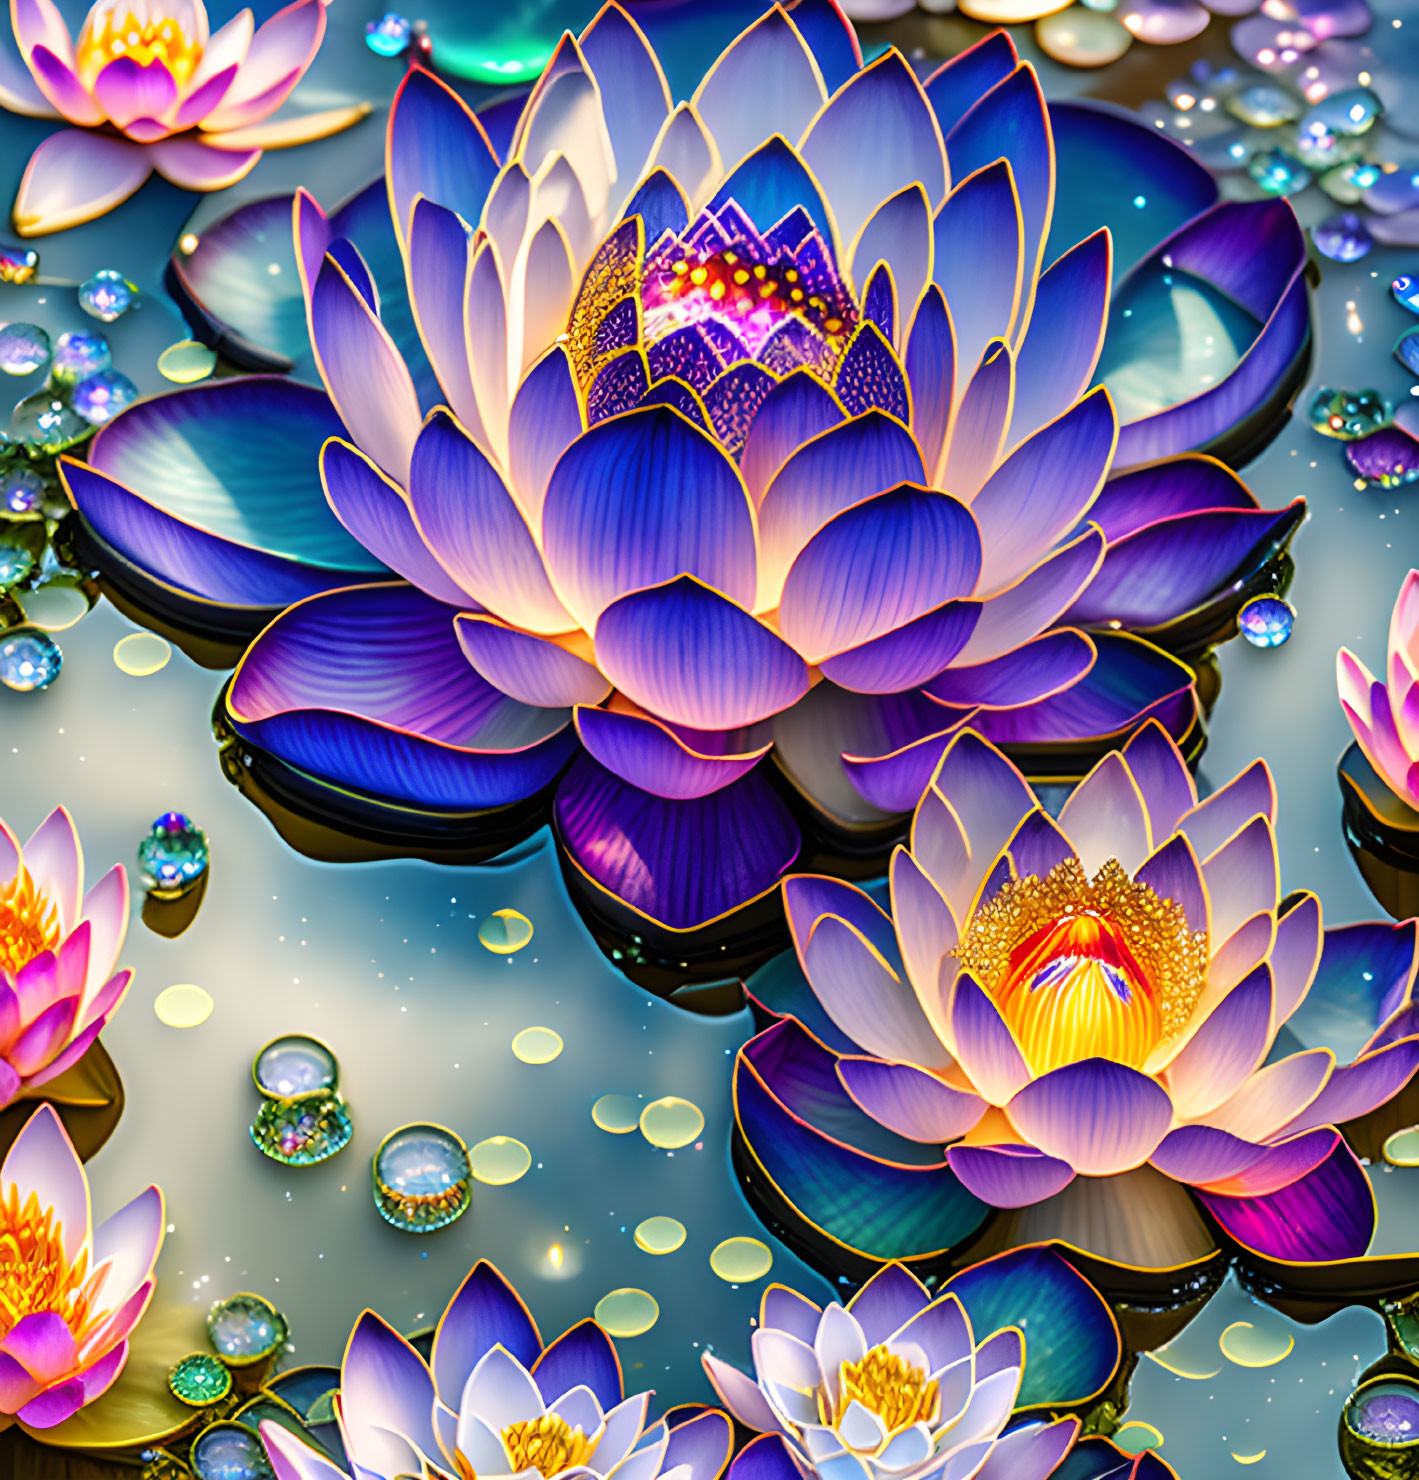 Illuminated Lotus Blossoms